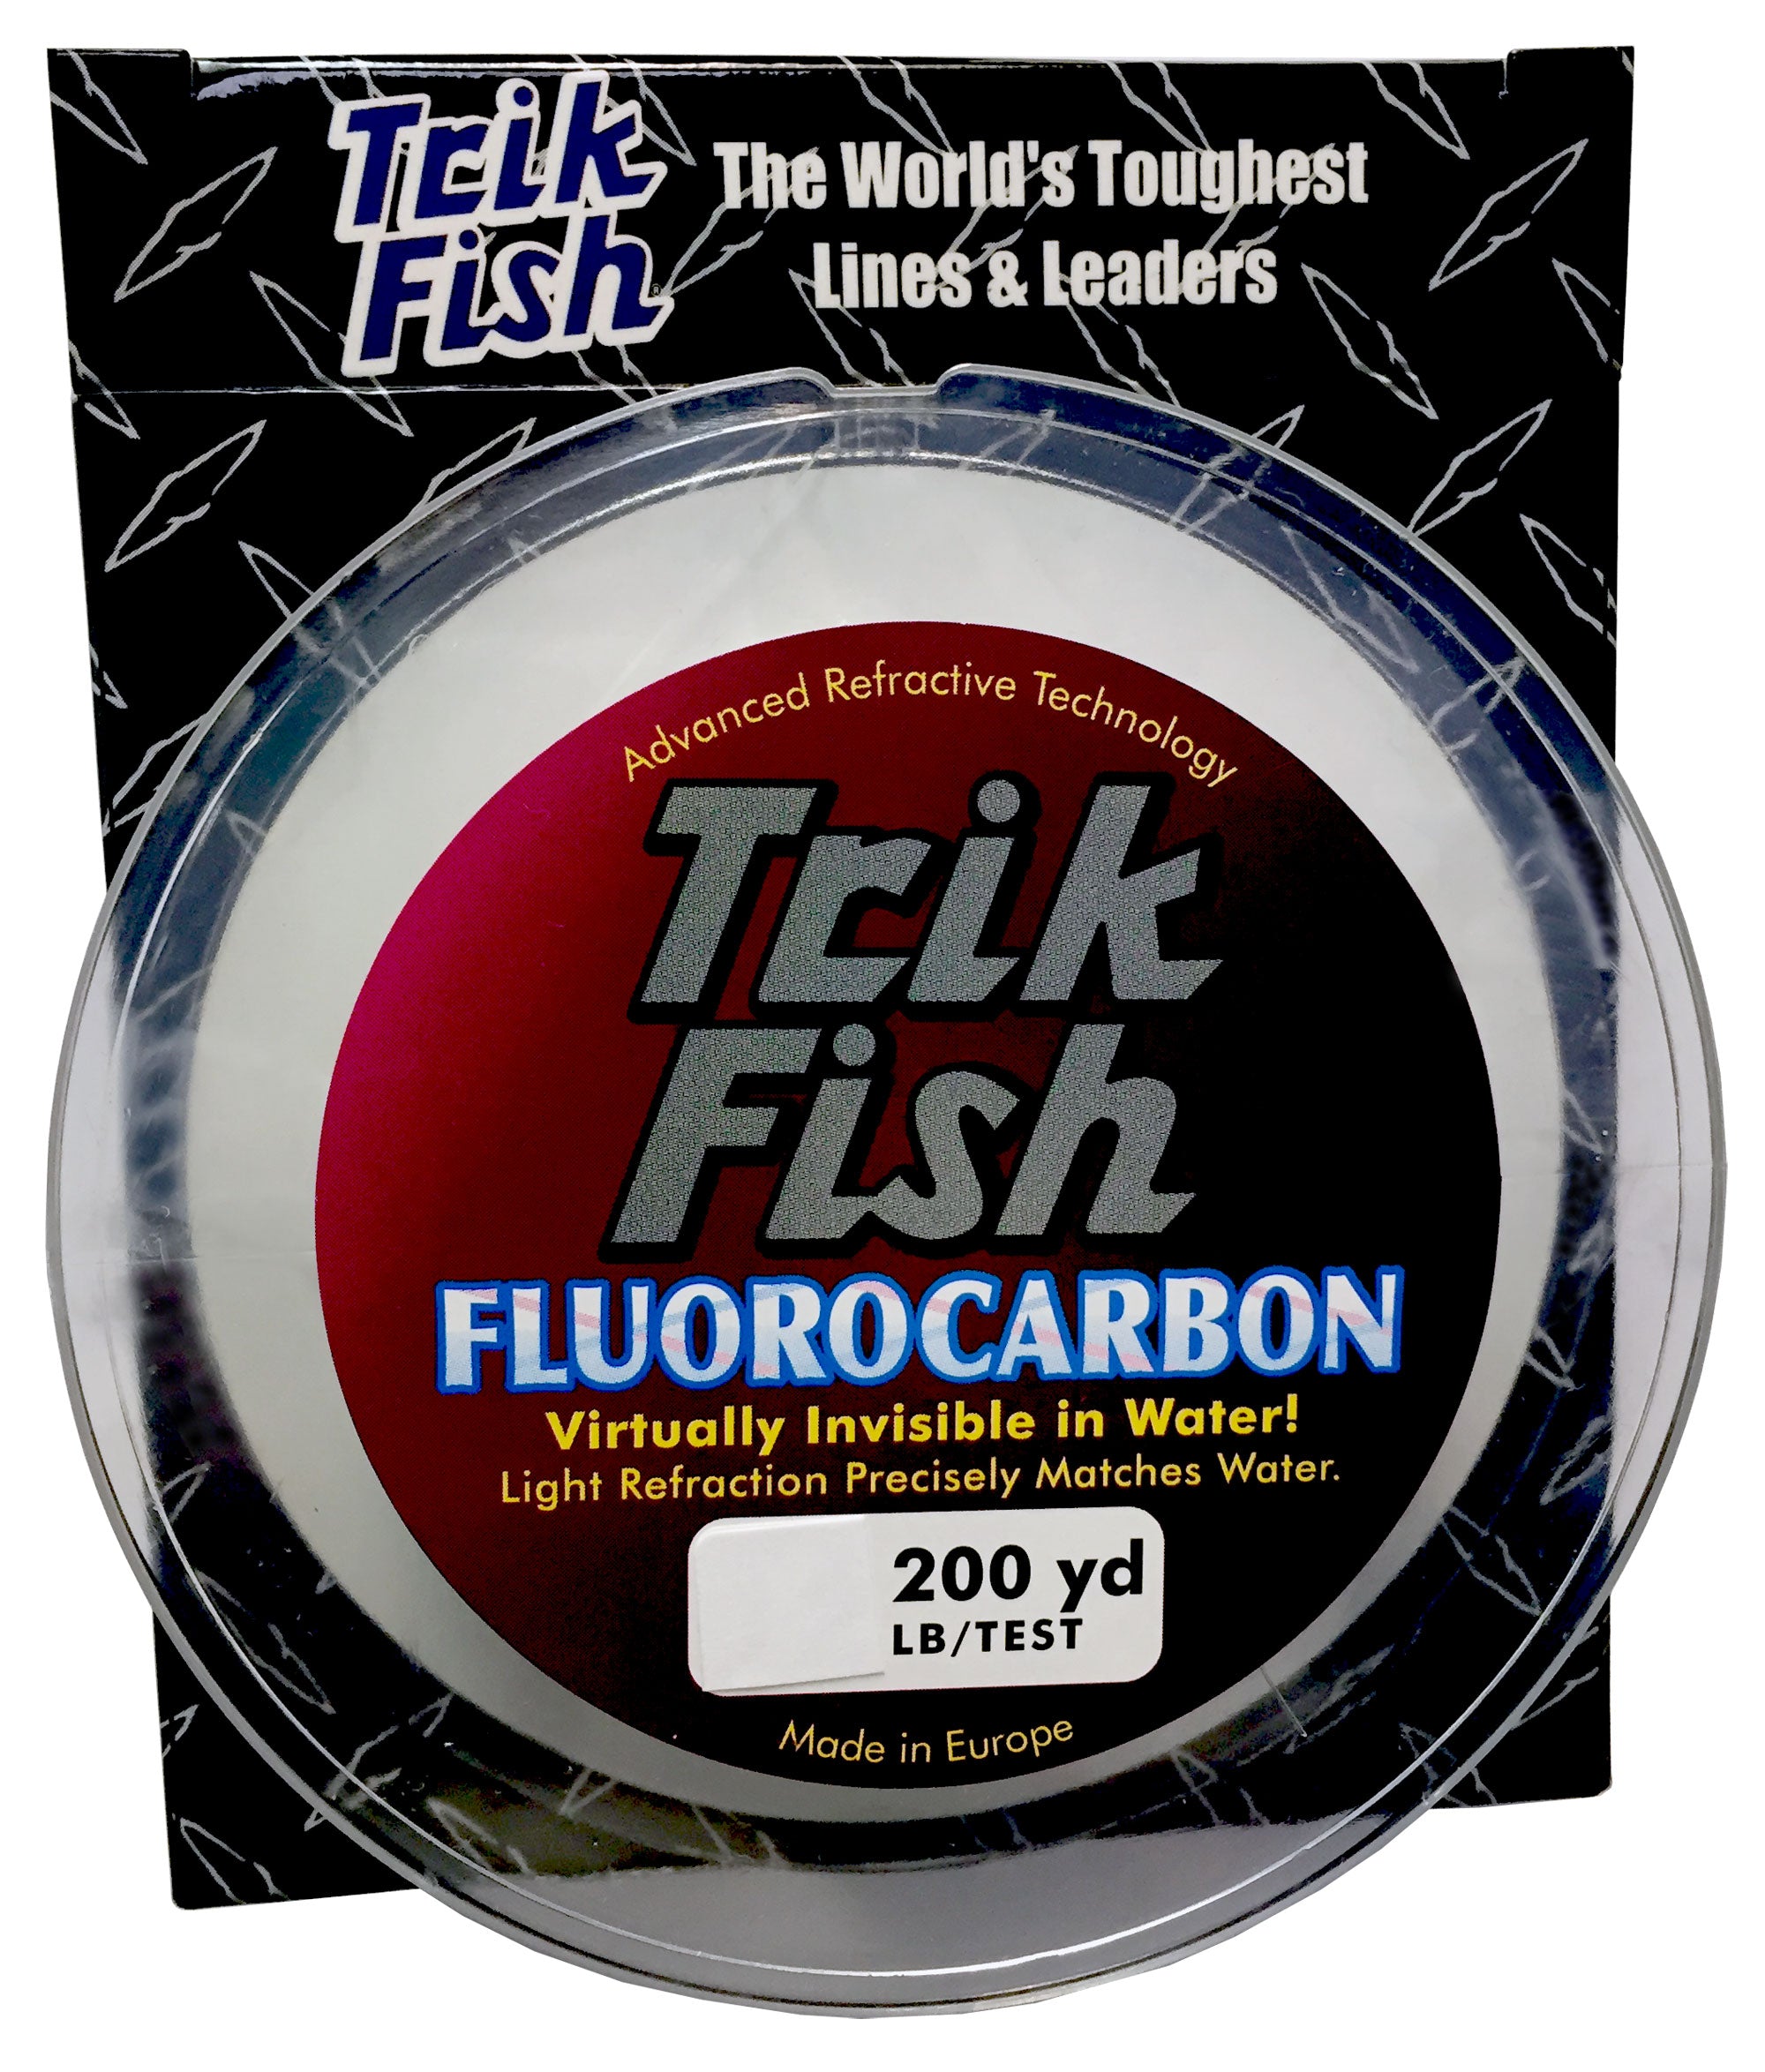 Triple Fish 4 lb Test Fluorocarbon Fishing Line, Clear, 0.18 mm/200